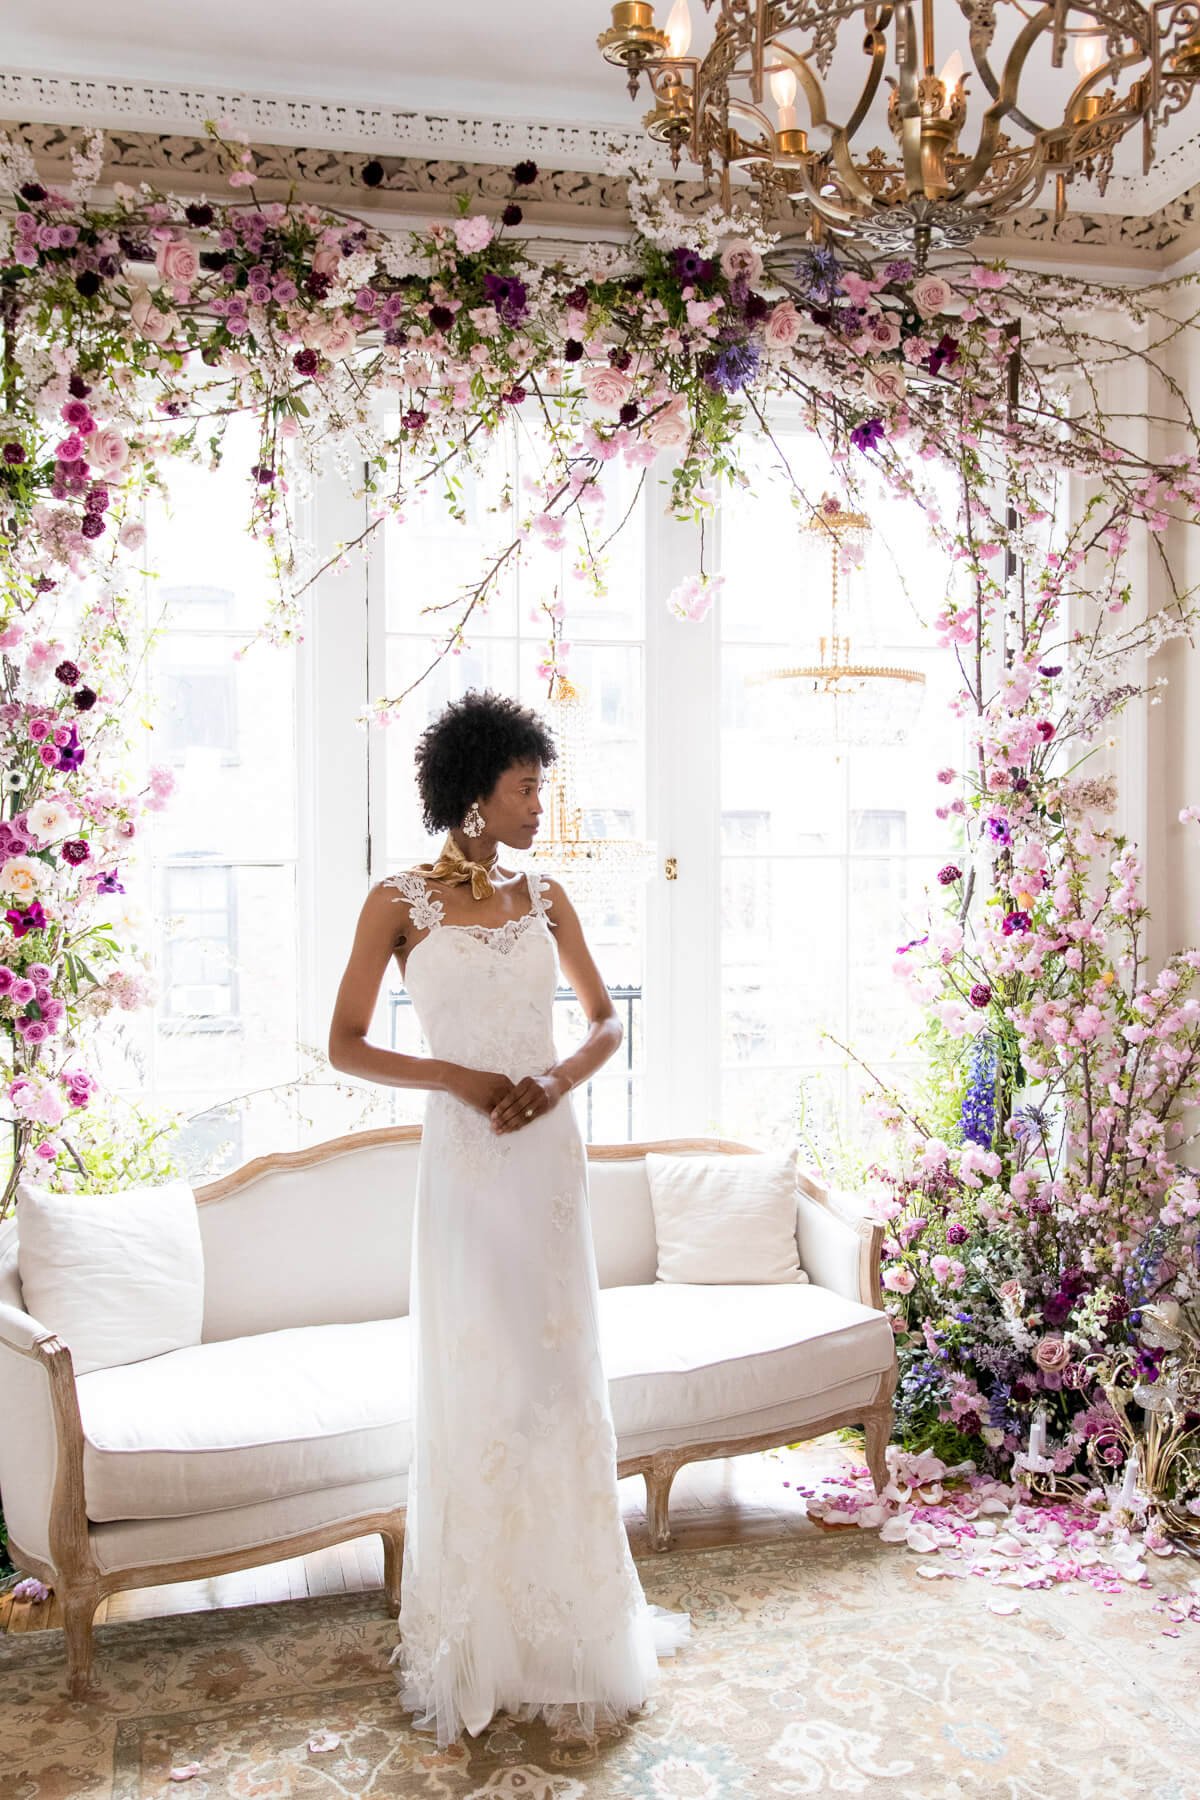 Morgan Newsom Claire Pettibone wedding dress designer New York photographer-1180.jpg